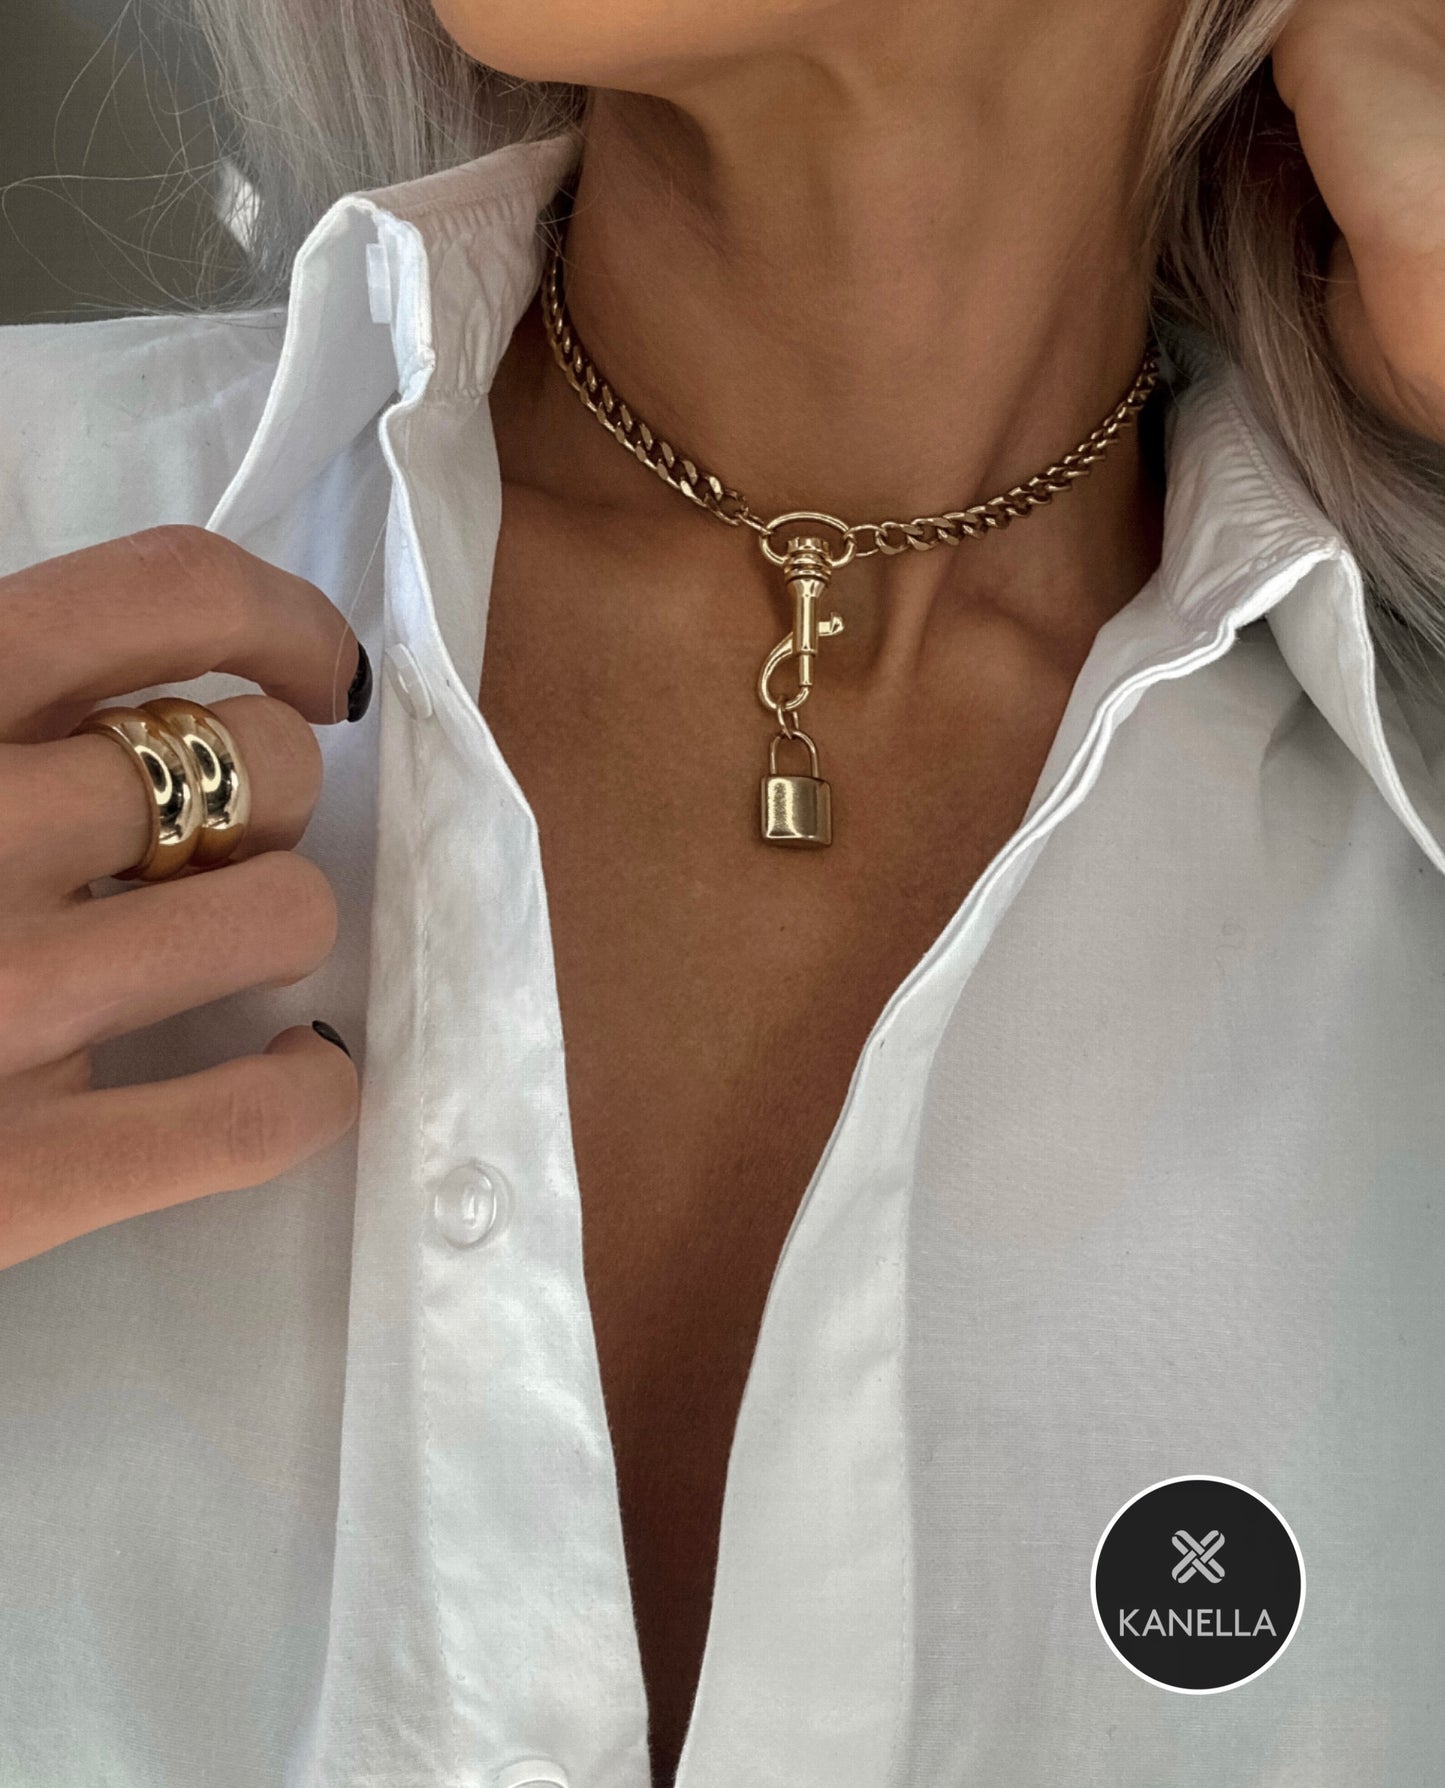 Kleio Chain Necklace